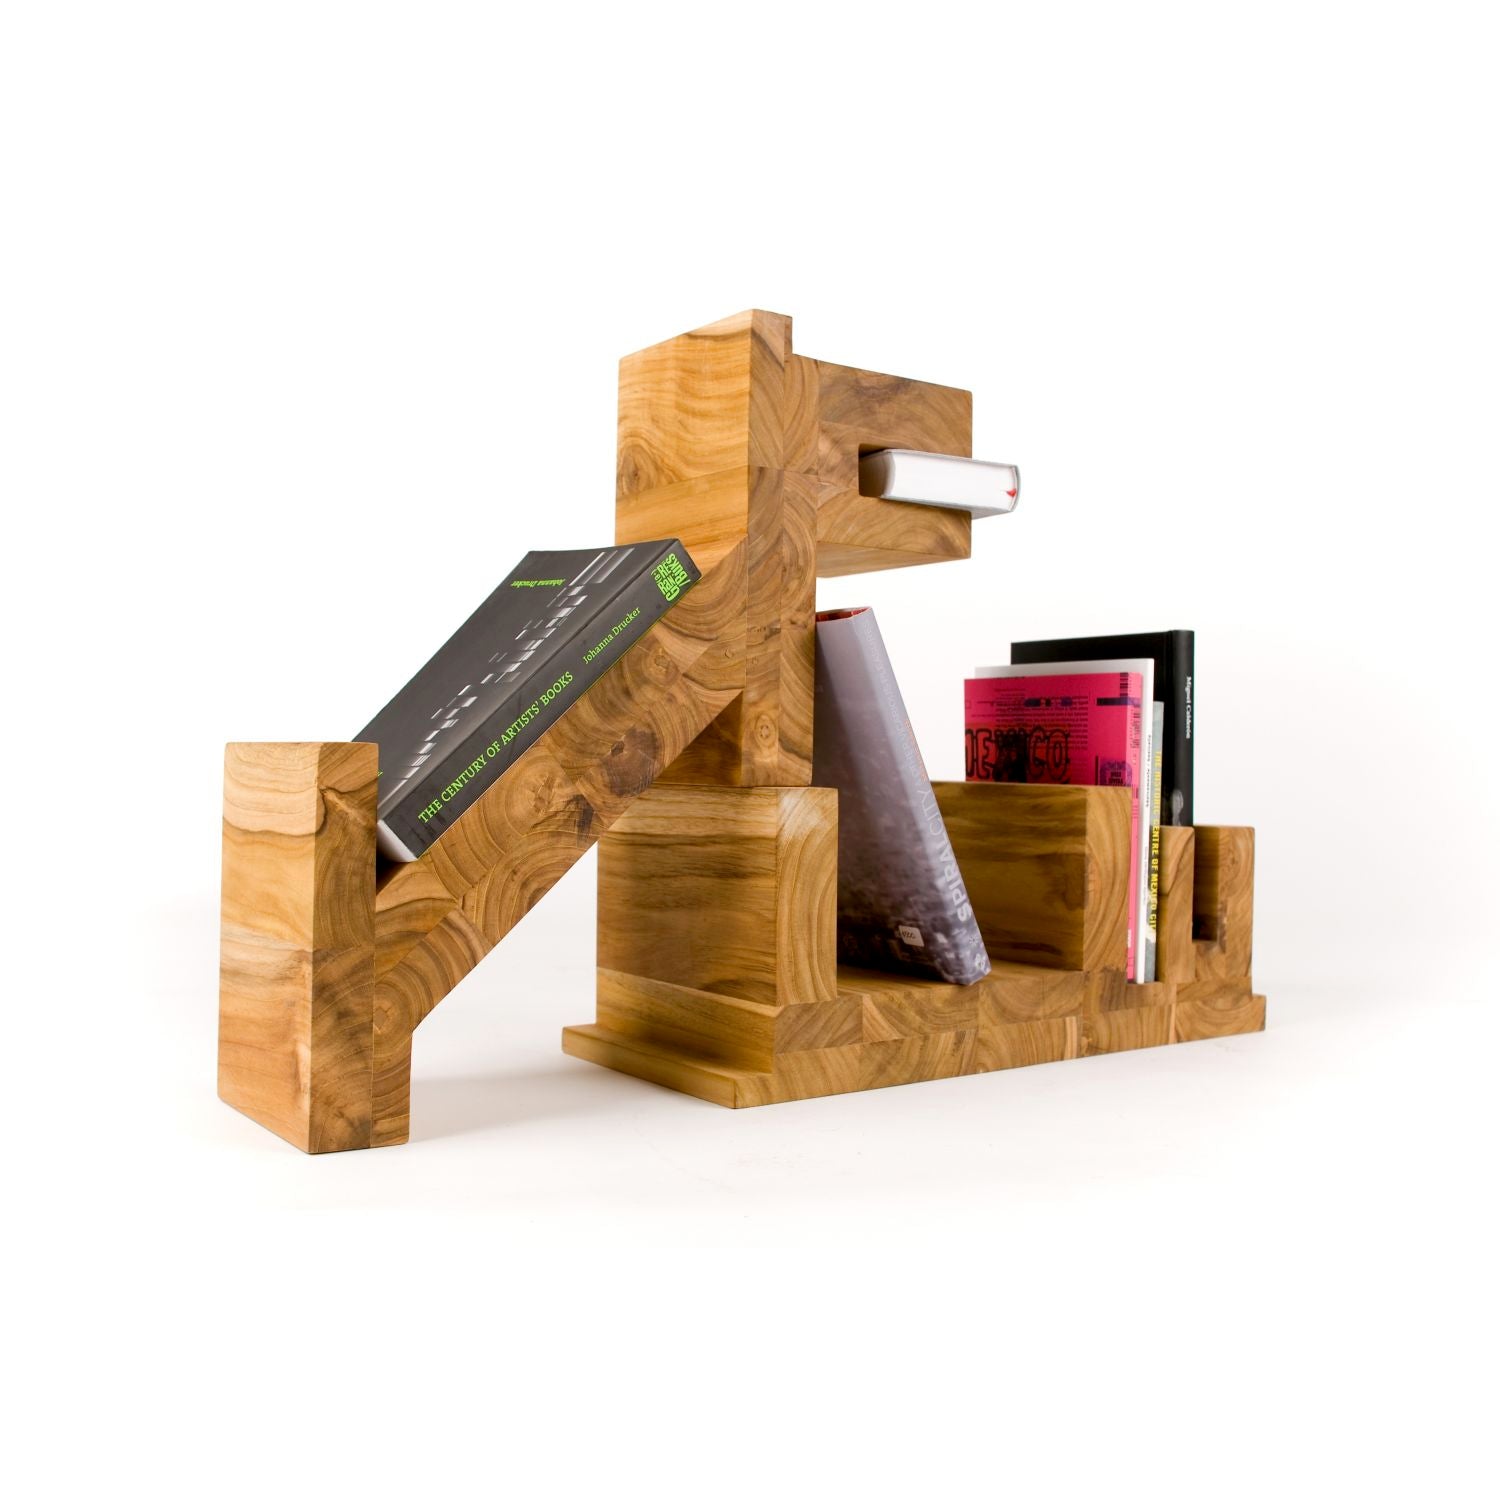 Alushe | Solid Wood Dog Shaped Sculpture